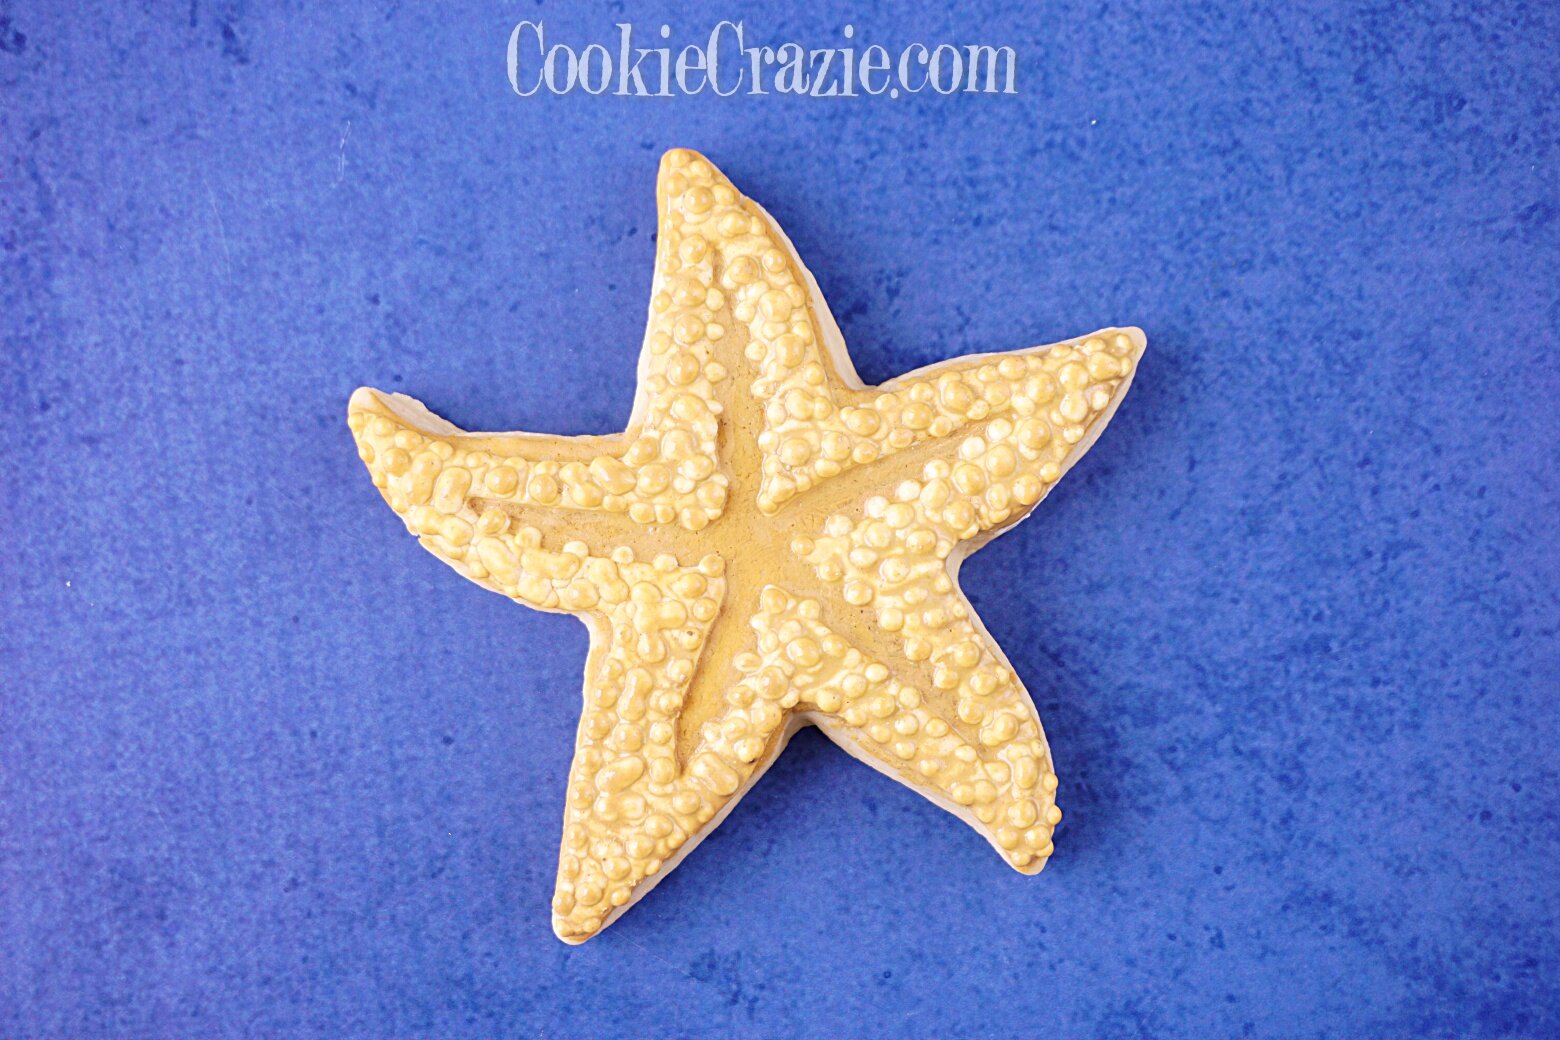  Starfish Decorated Sugar Cookie YouTube video  HERE  